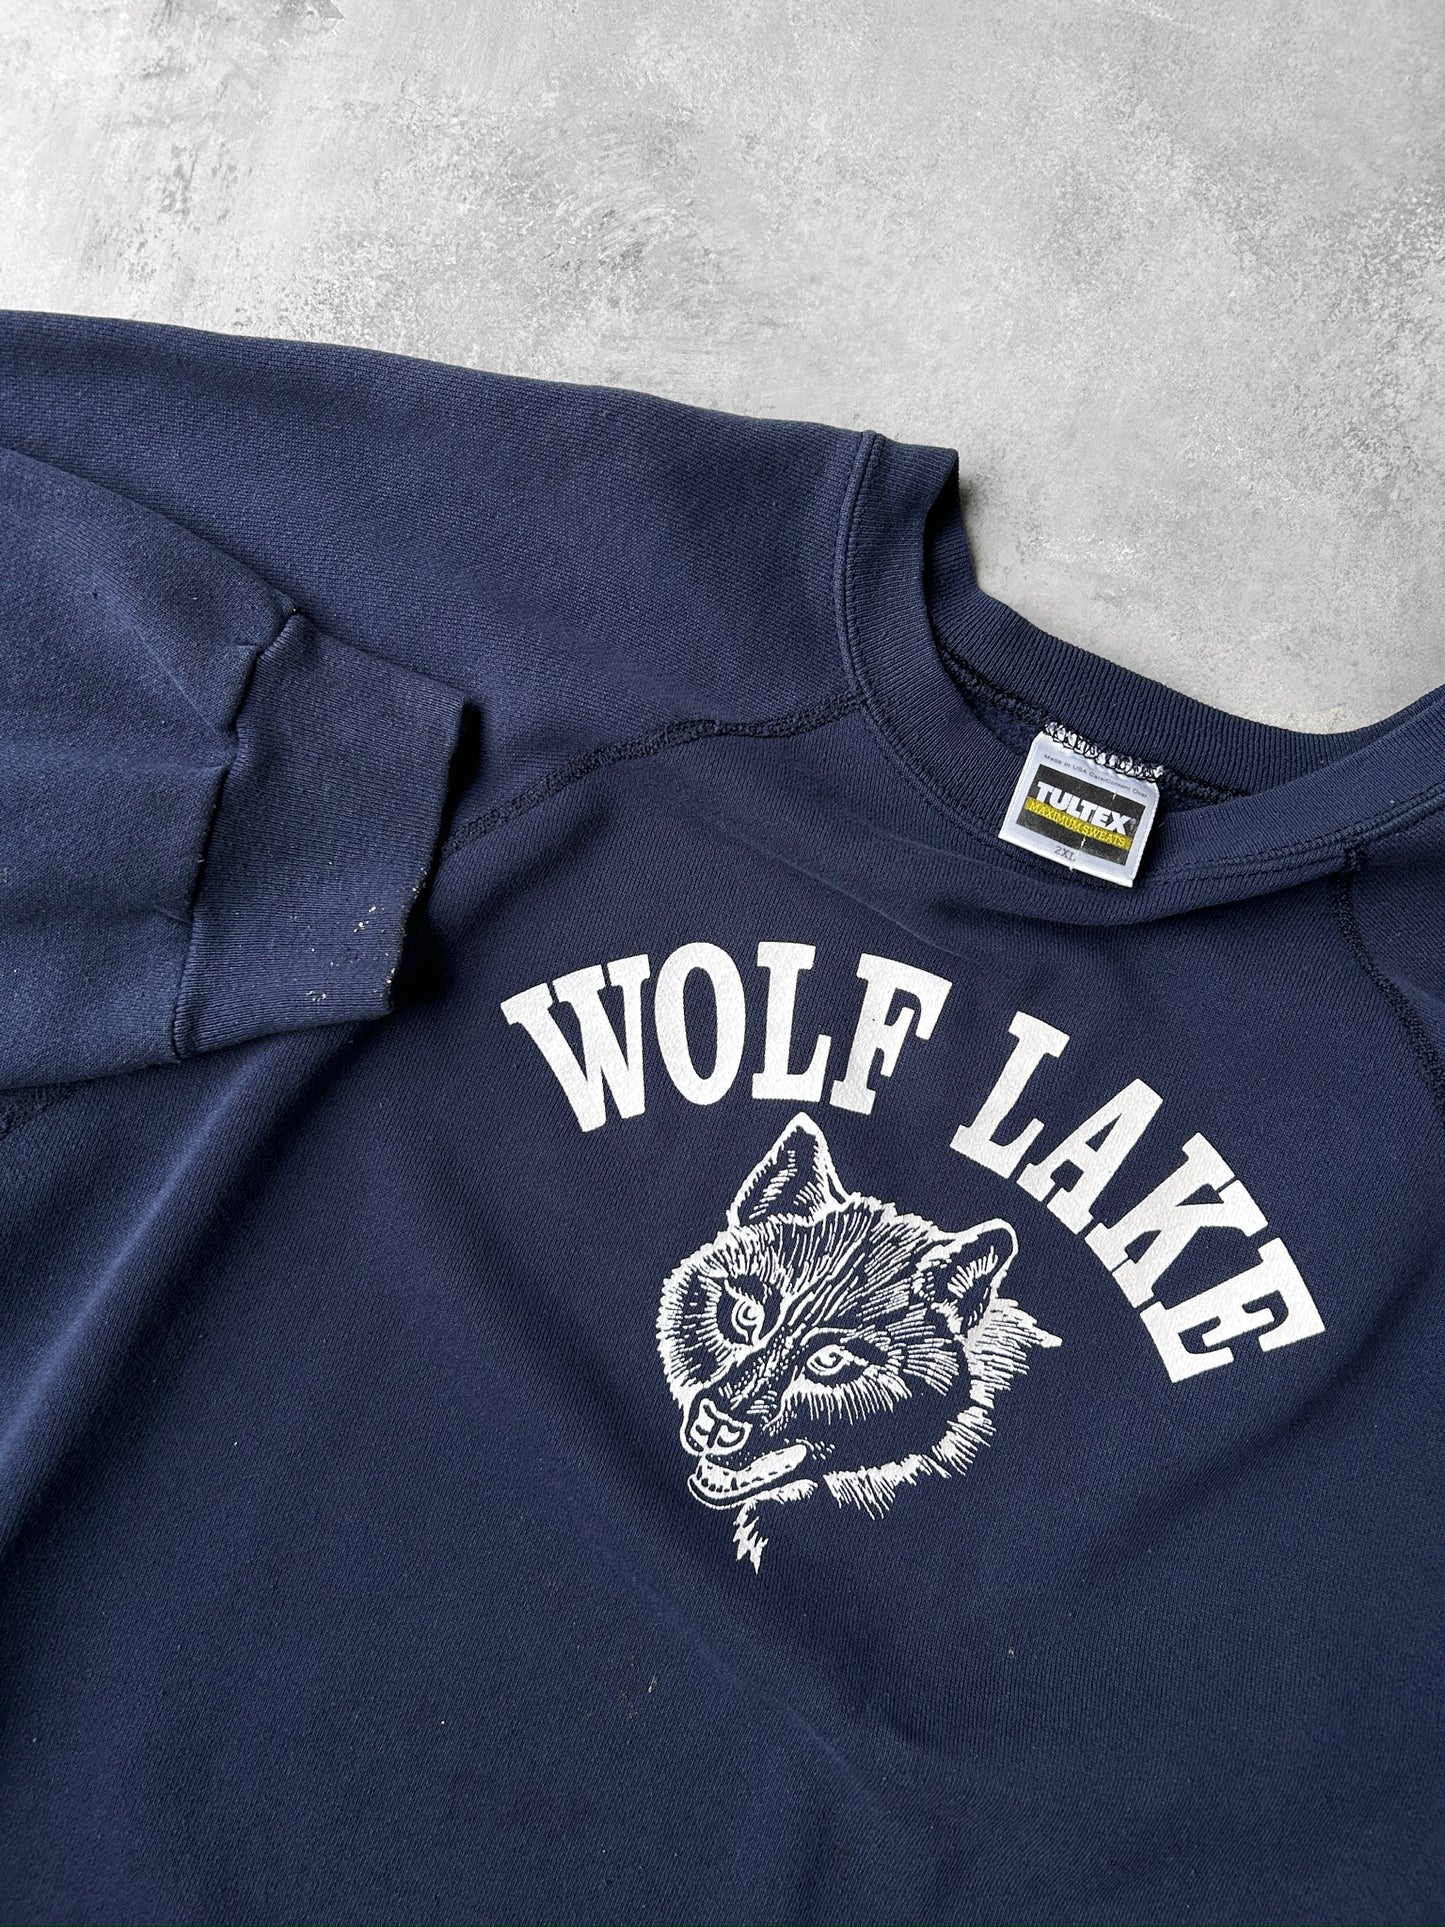 Wolf Lake Sweatshirt 90's - XXL